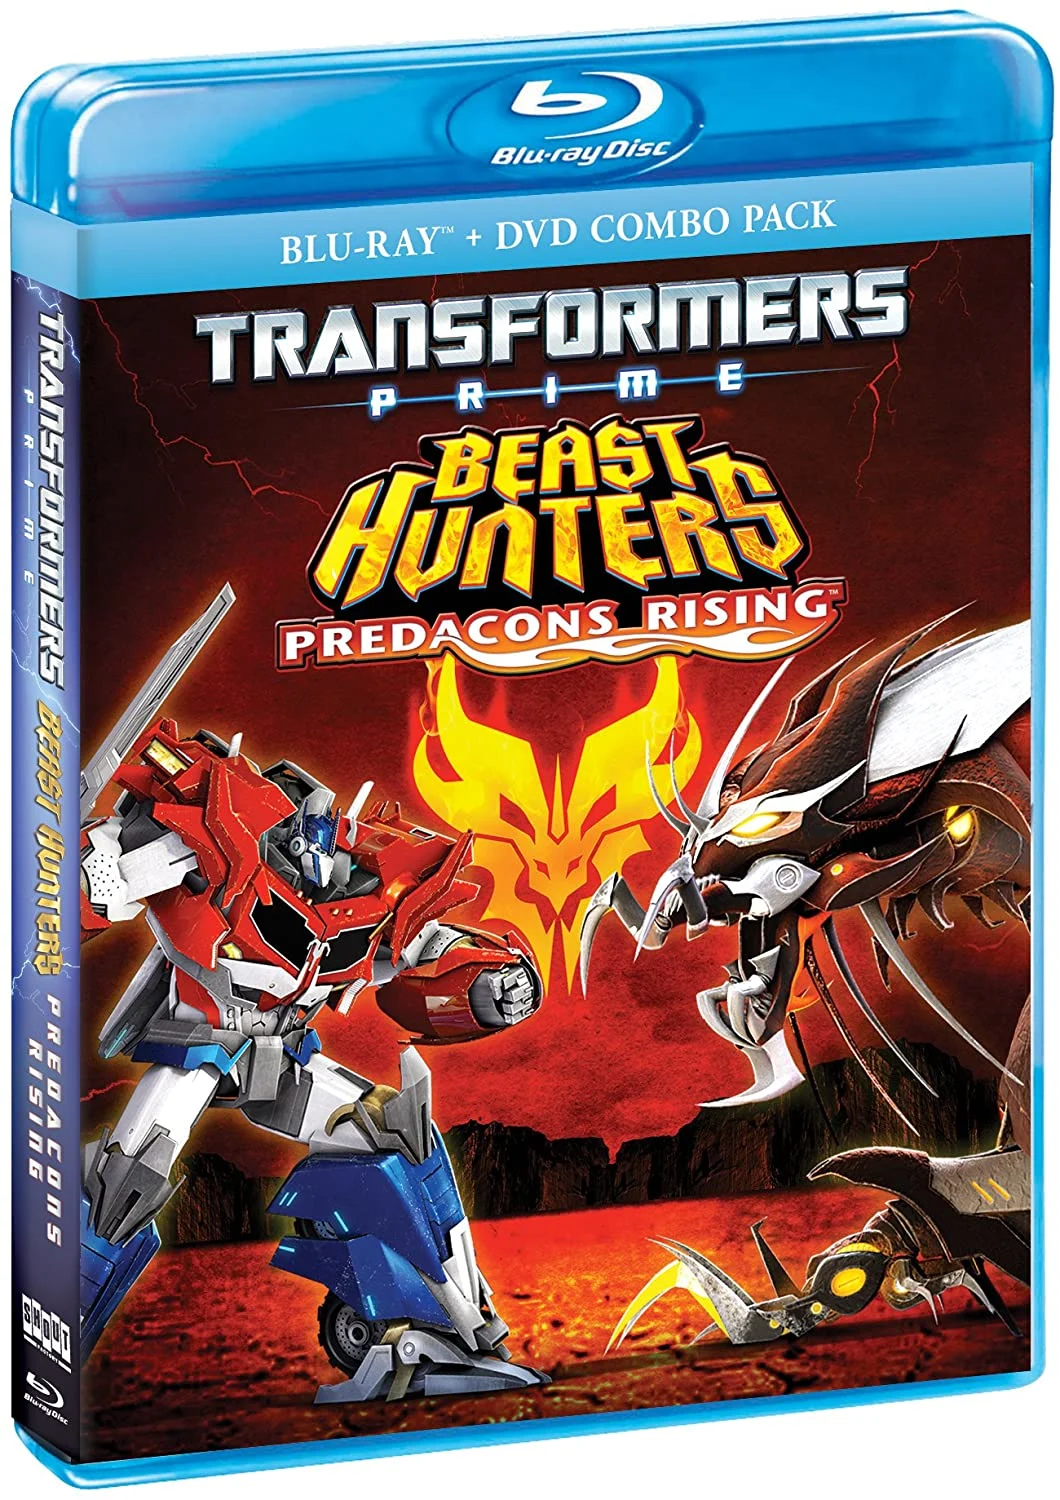 Transformers Prime: Predacons Rising (Blu-ray/DVD Combo)